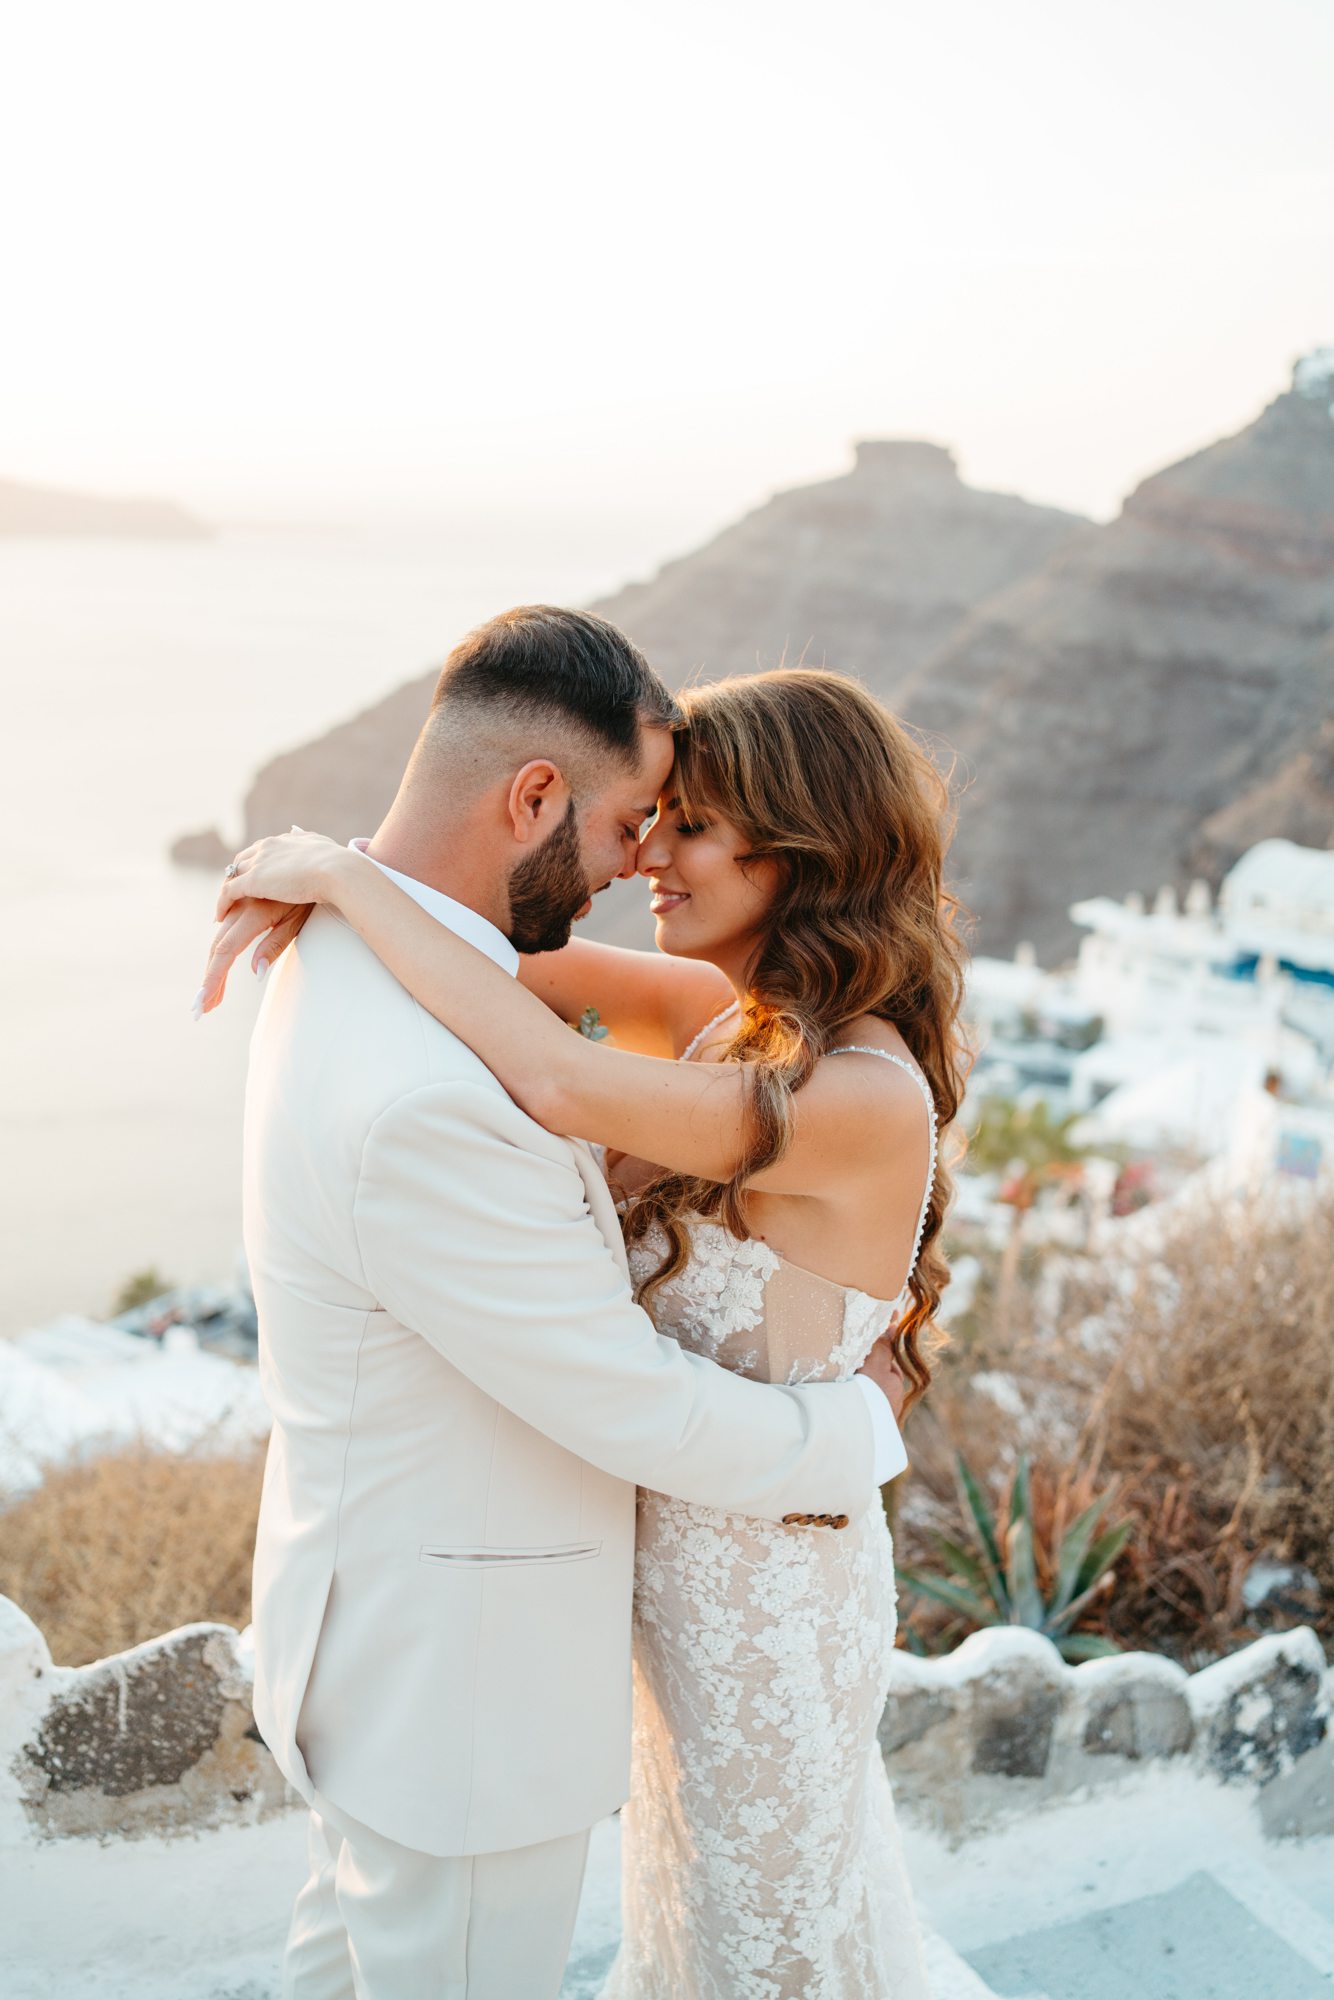 Greece wedding planning guide